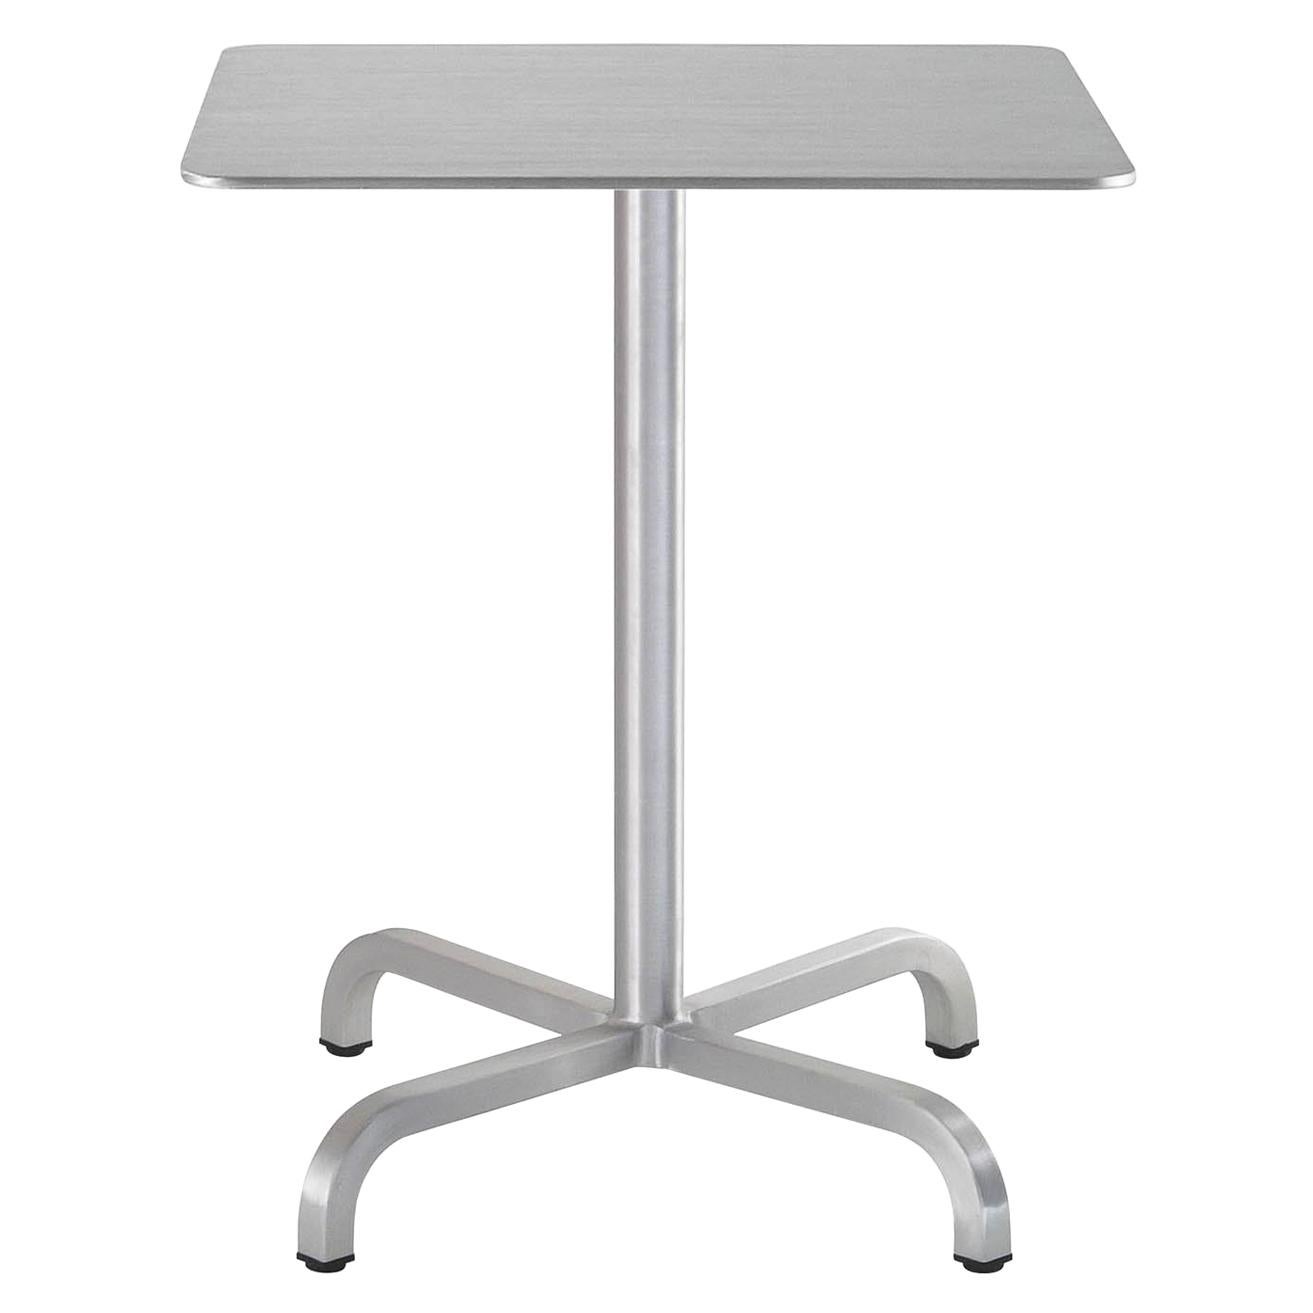 Petite table basse carrée en aluminium brossé Emeco 20-06 de Norman Foster